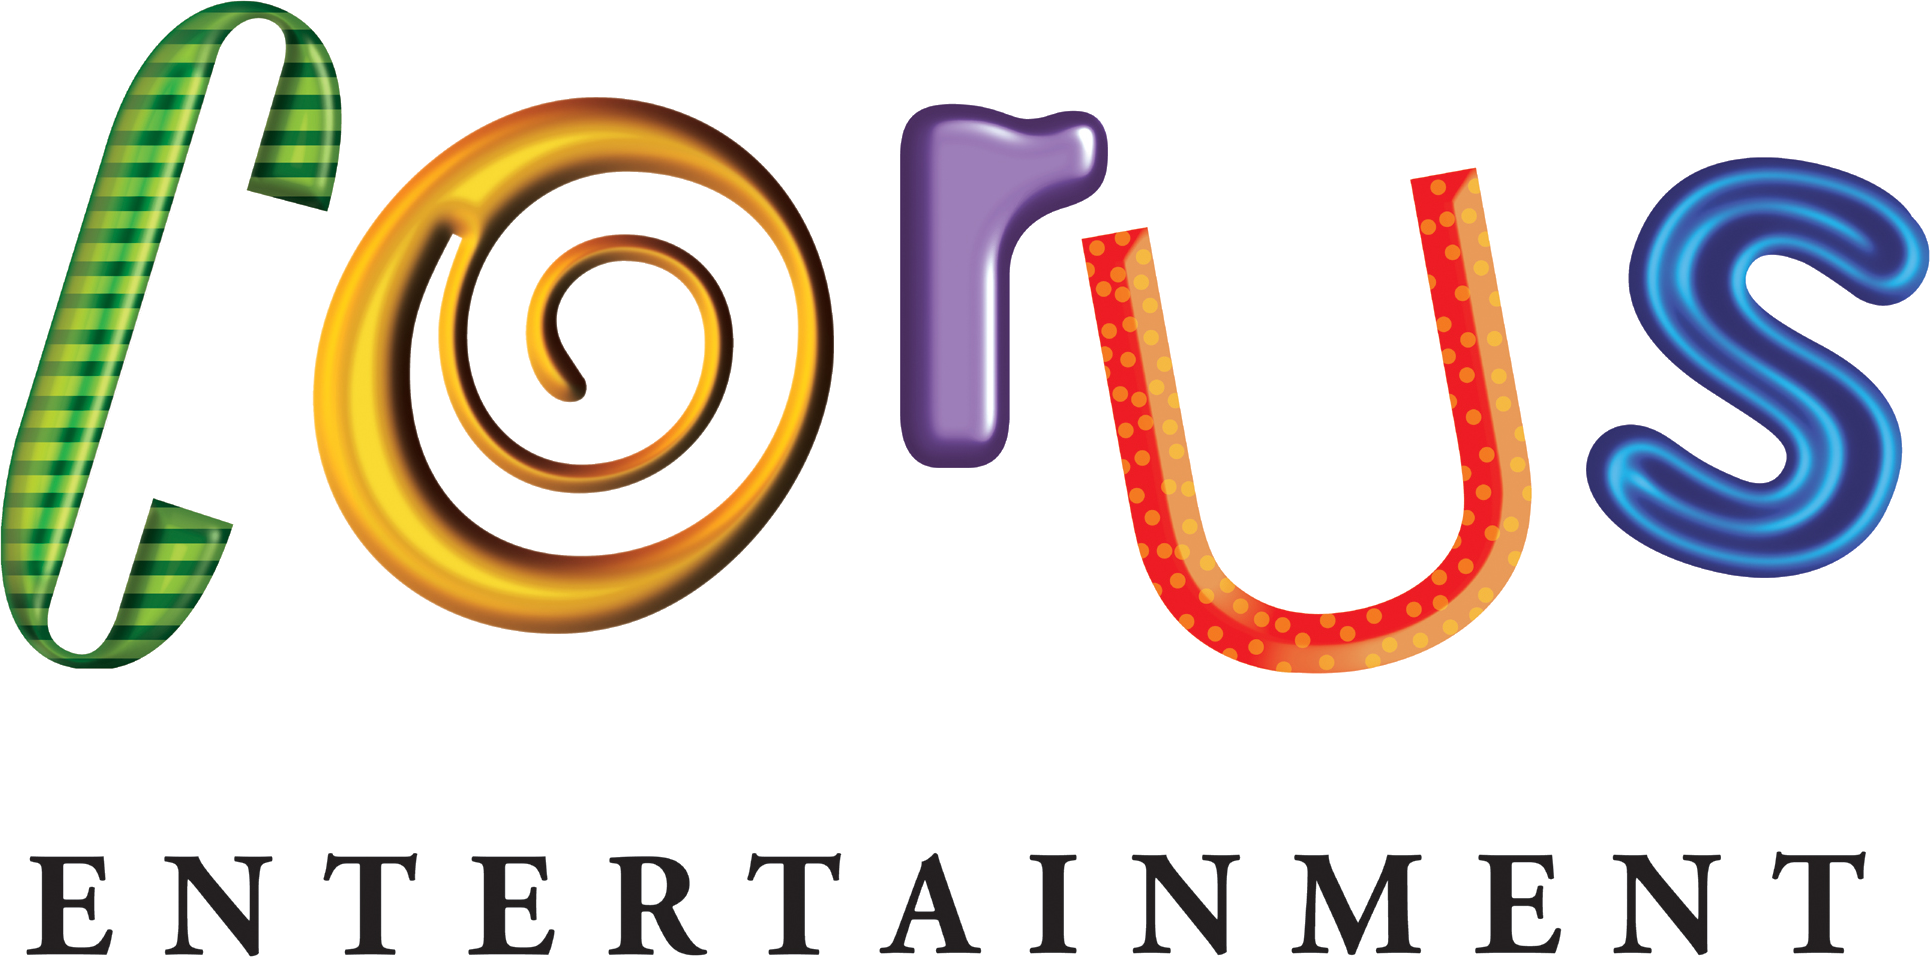 Entertainment Logos And Names